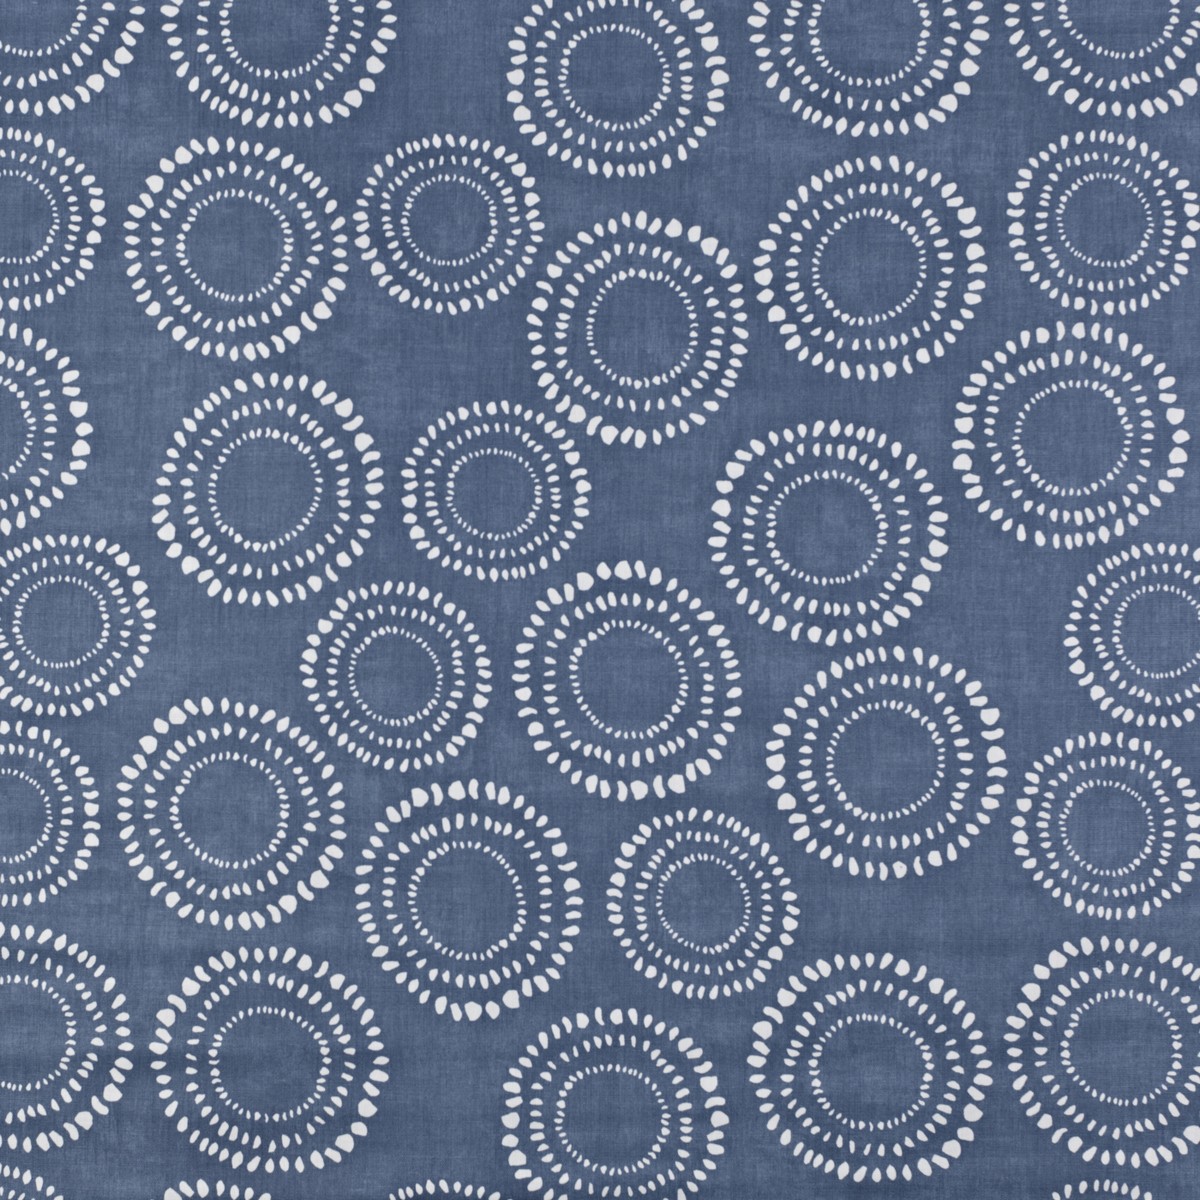 Embankment Denim Fabric by Prestigious Textiles